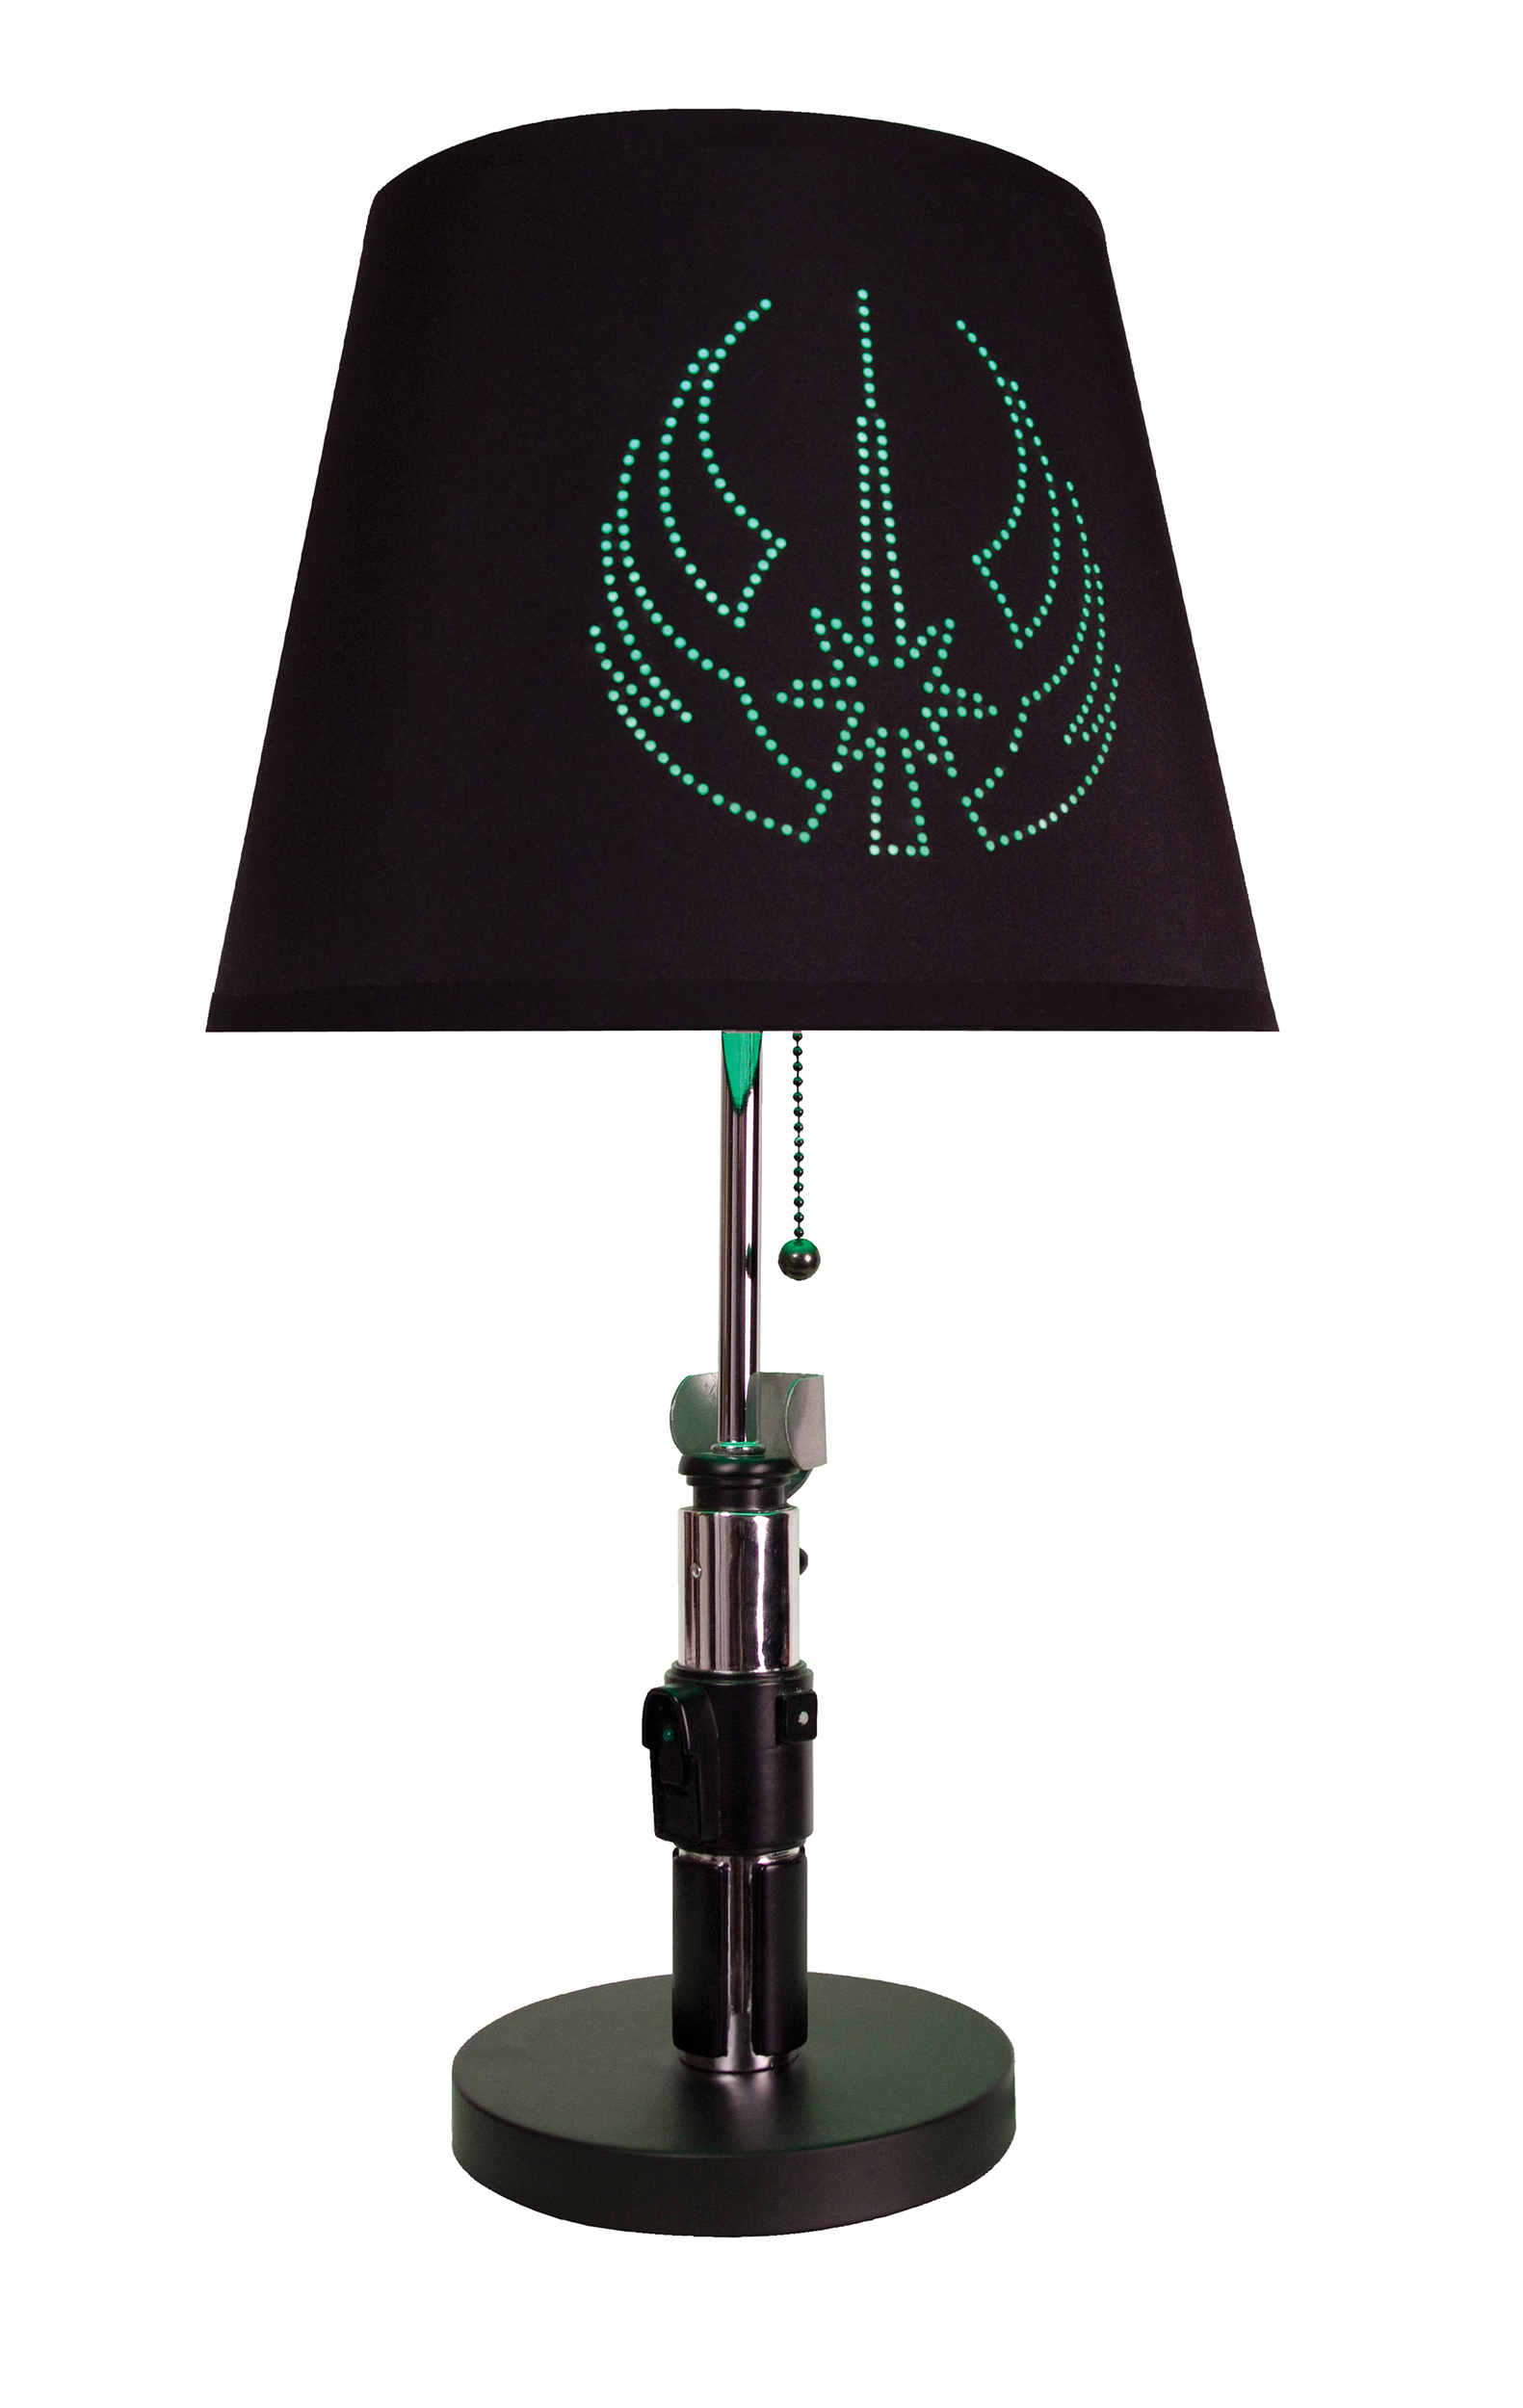 Star Wars Lightsaber Table Lamps Bring, Lightsaber Table Lamp